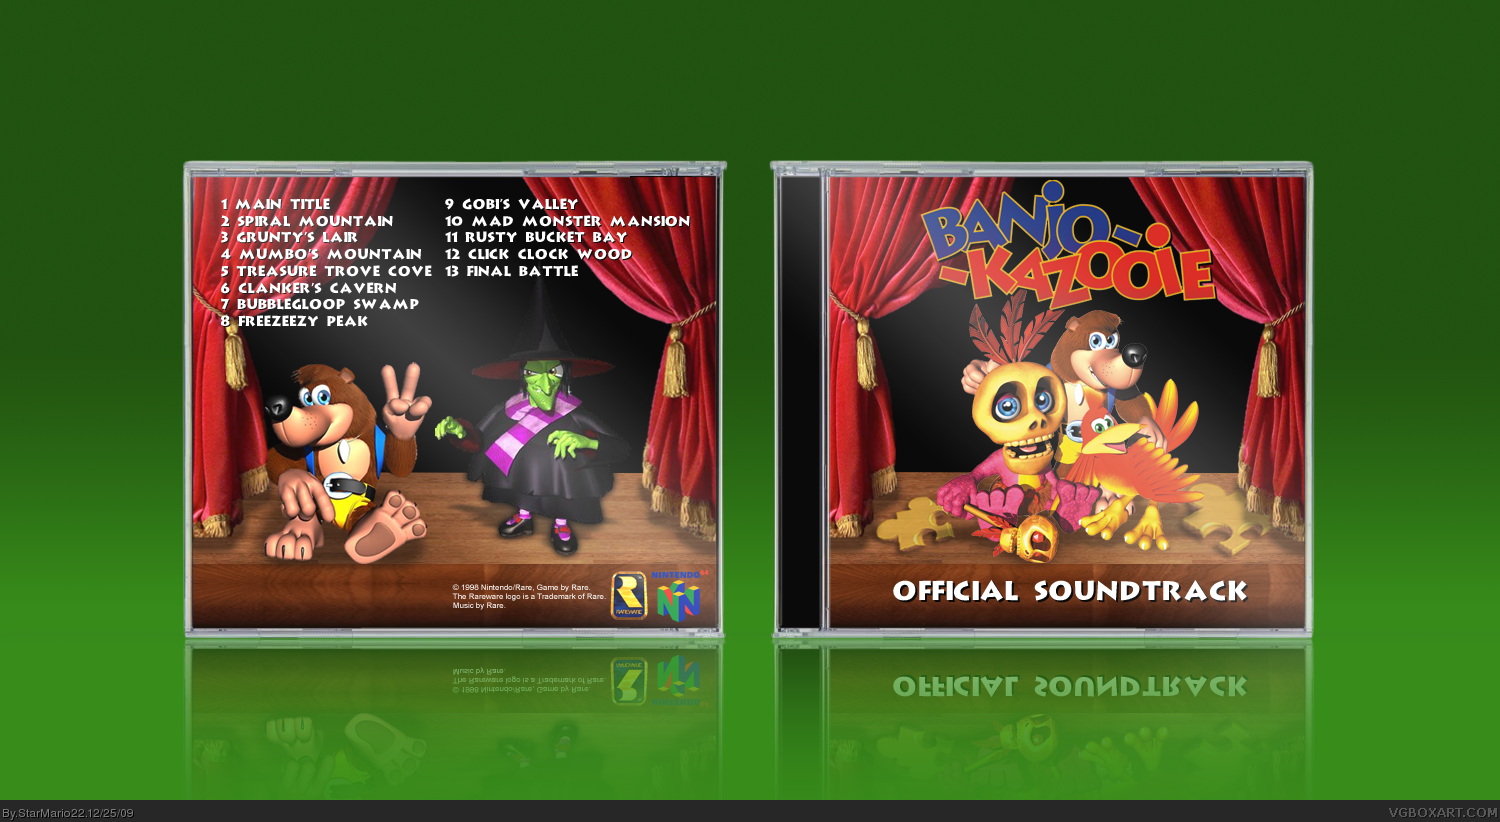 Banjo-Kazooie Official Soundtrack box cover